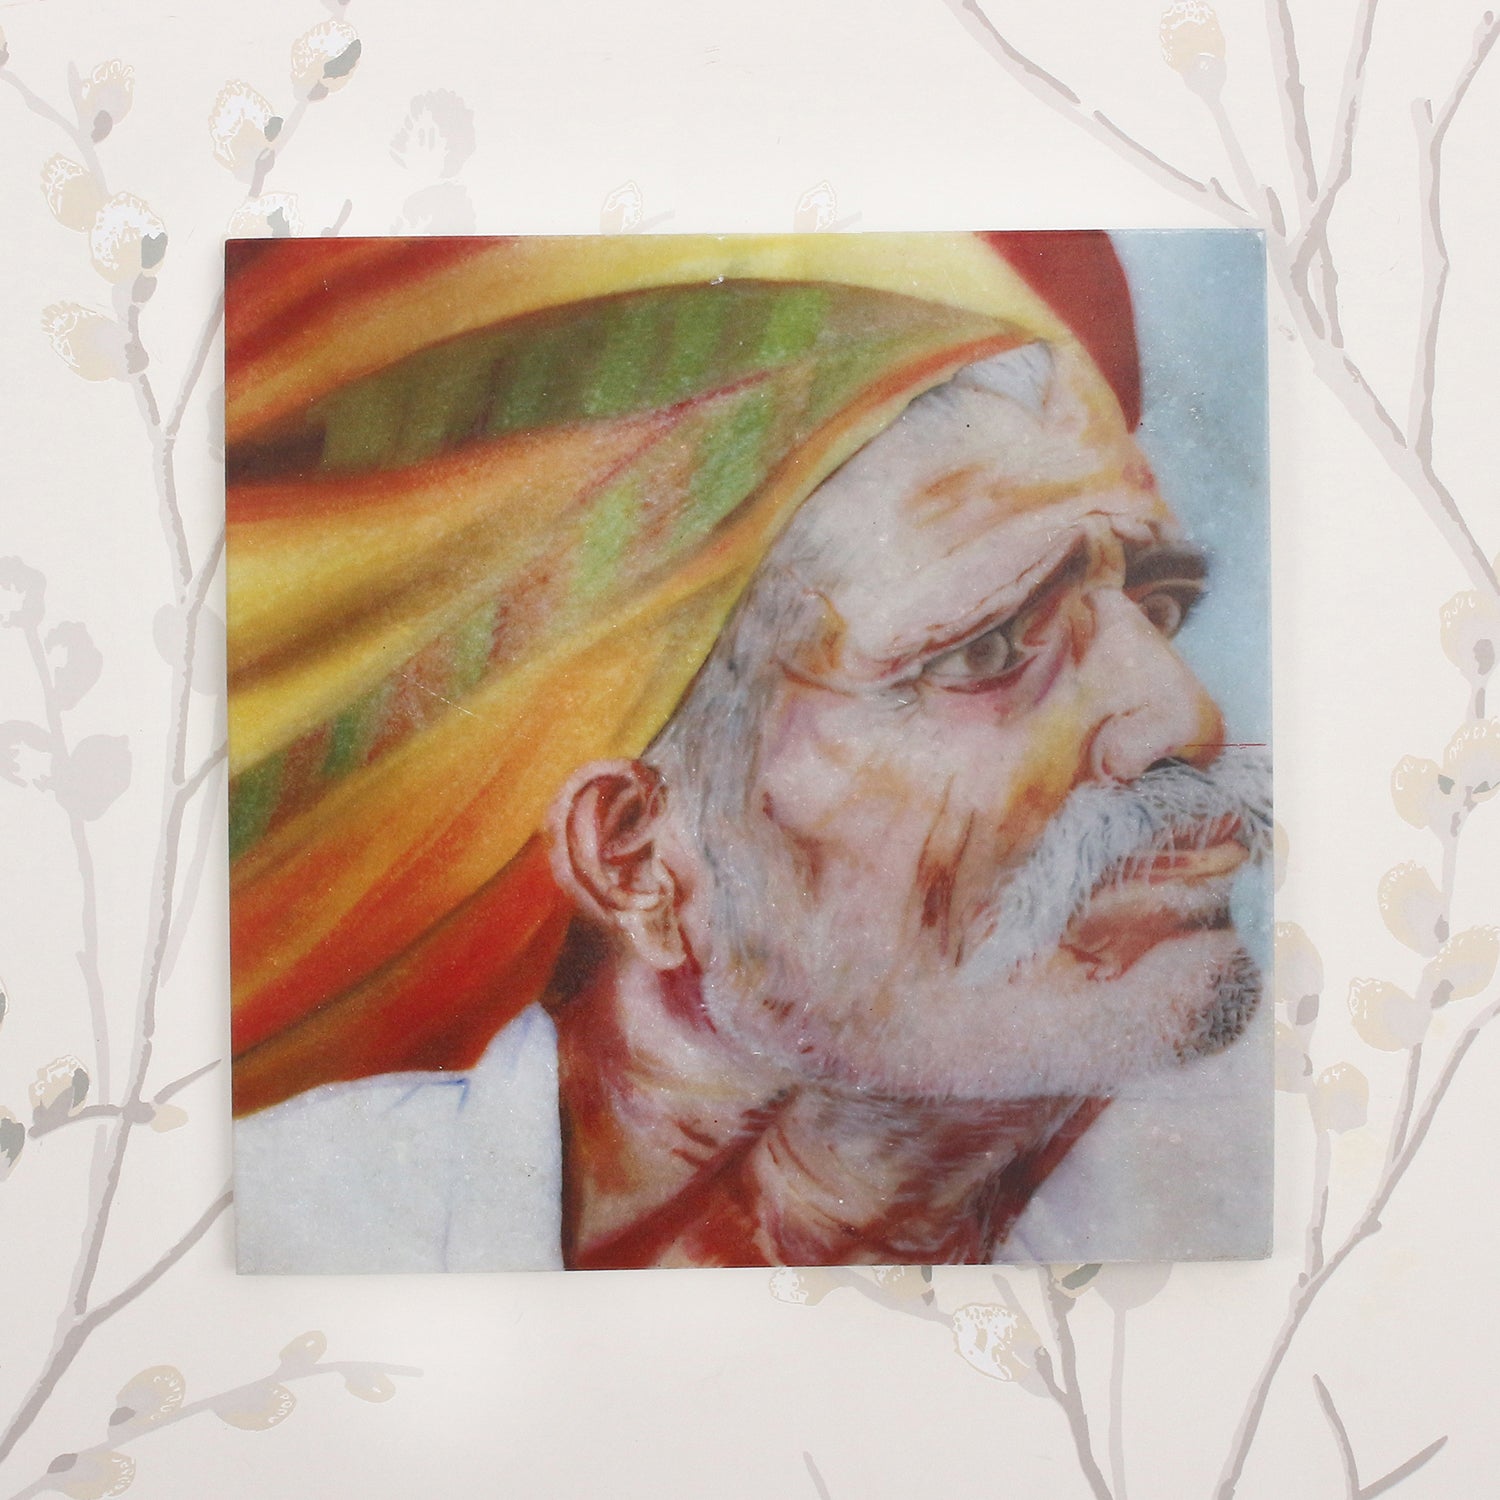 Rajasthani Old Man Wearing Turban Painting On Marble Square Tile